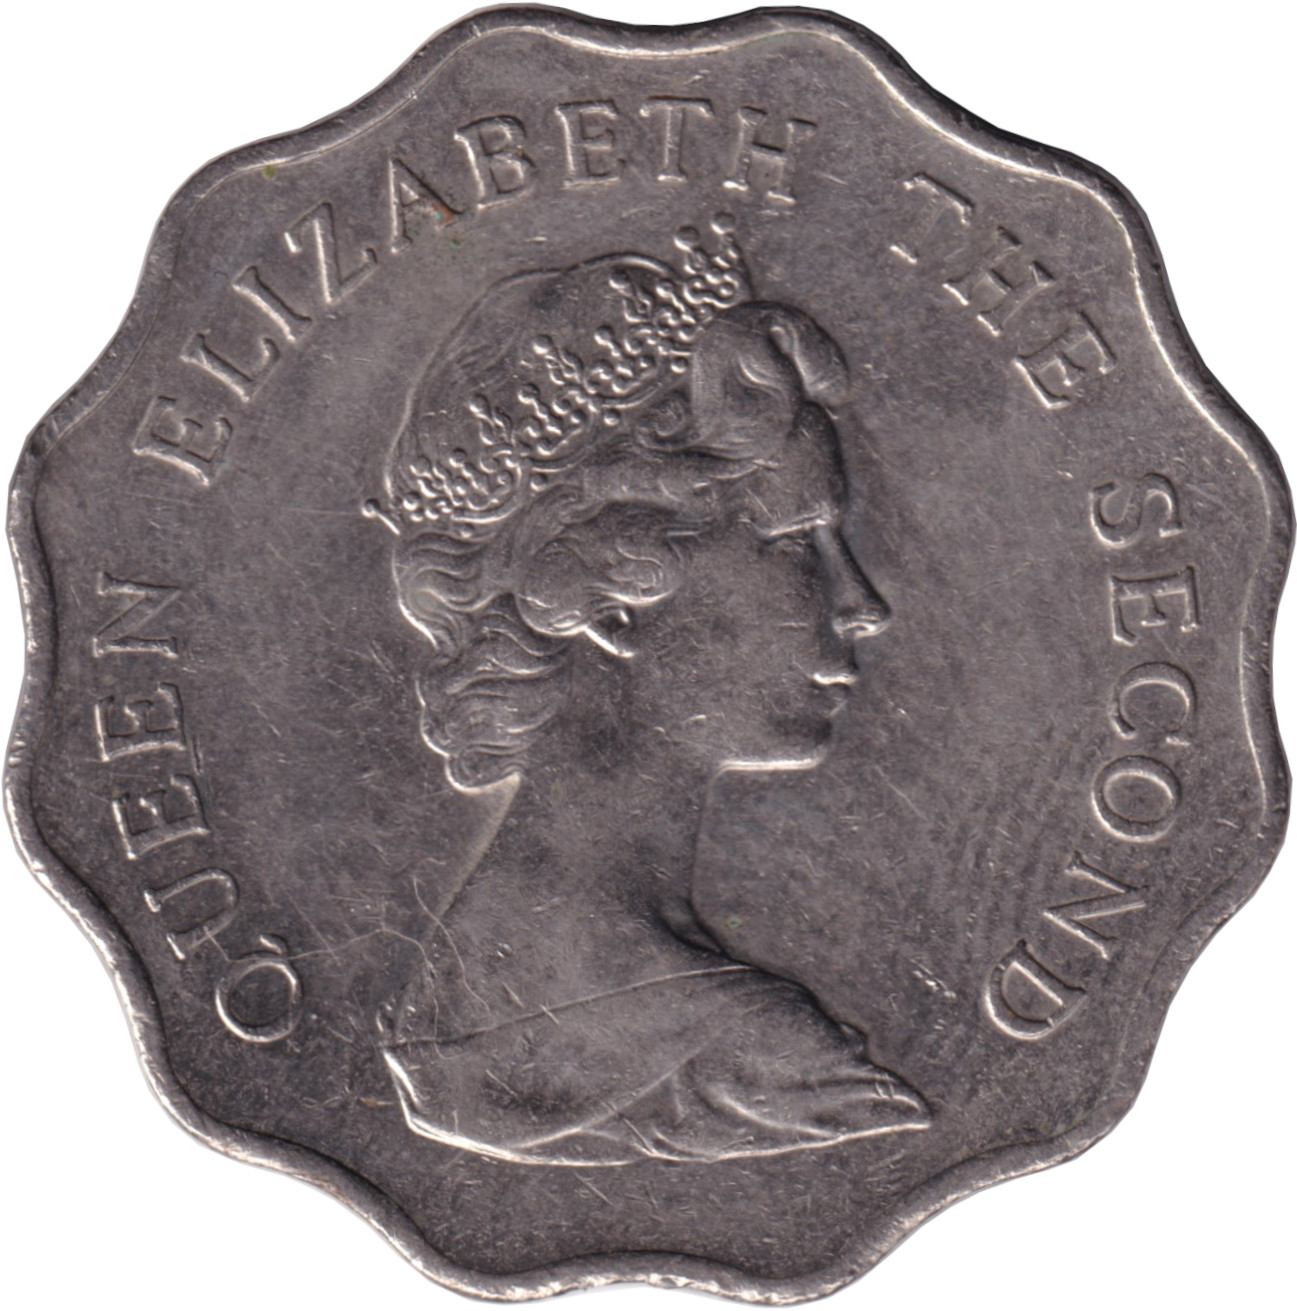 2 dollars - Elizabeth II - Buste mature